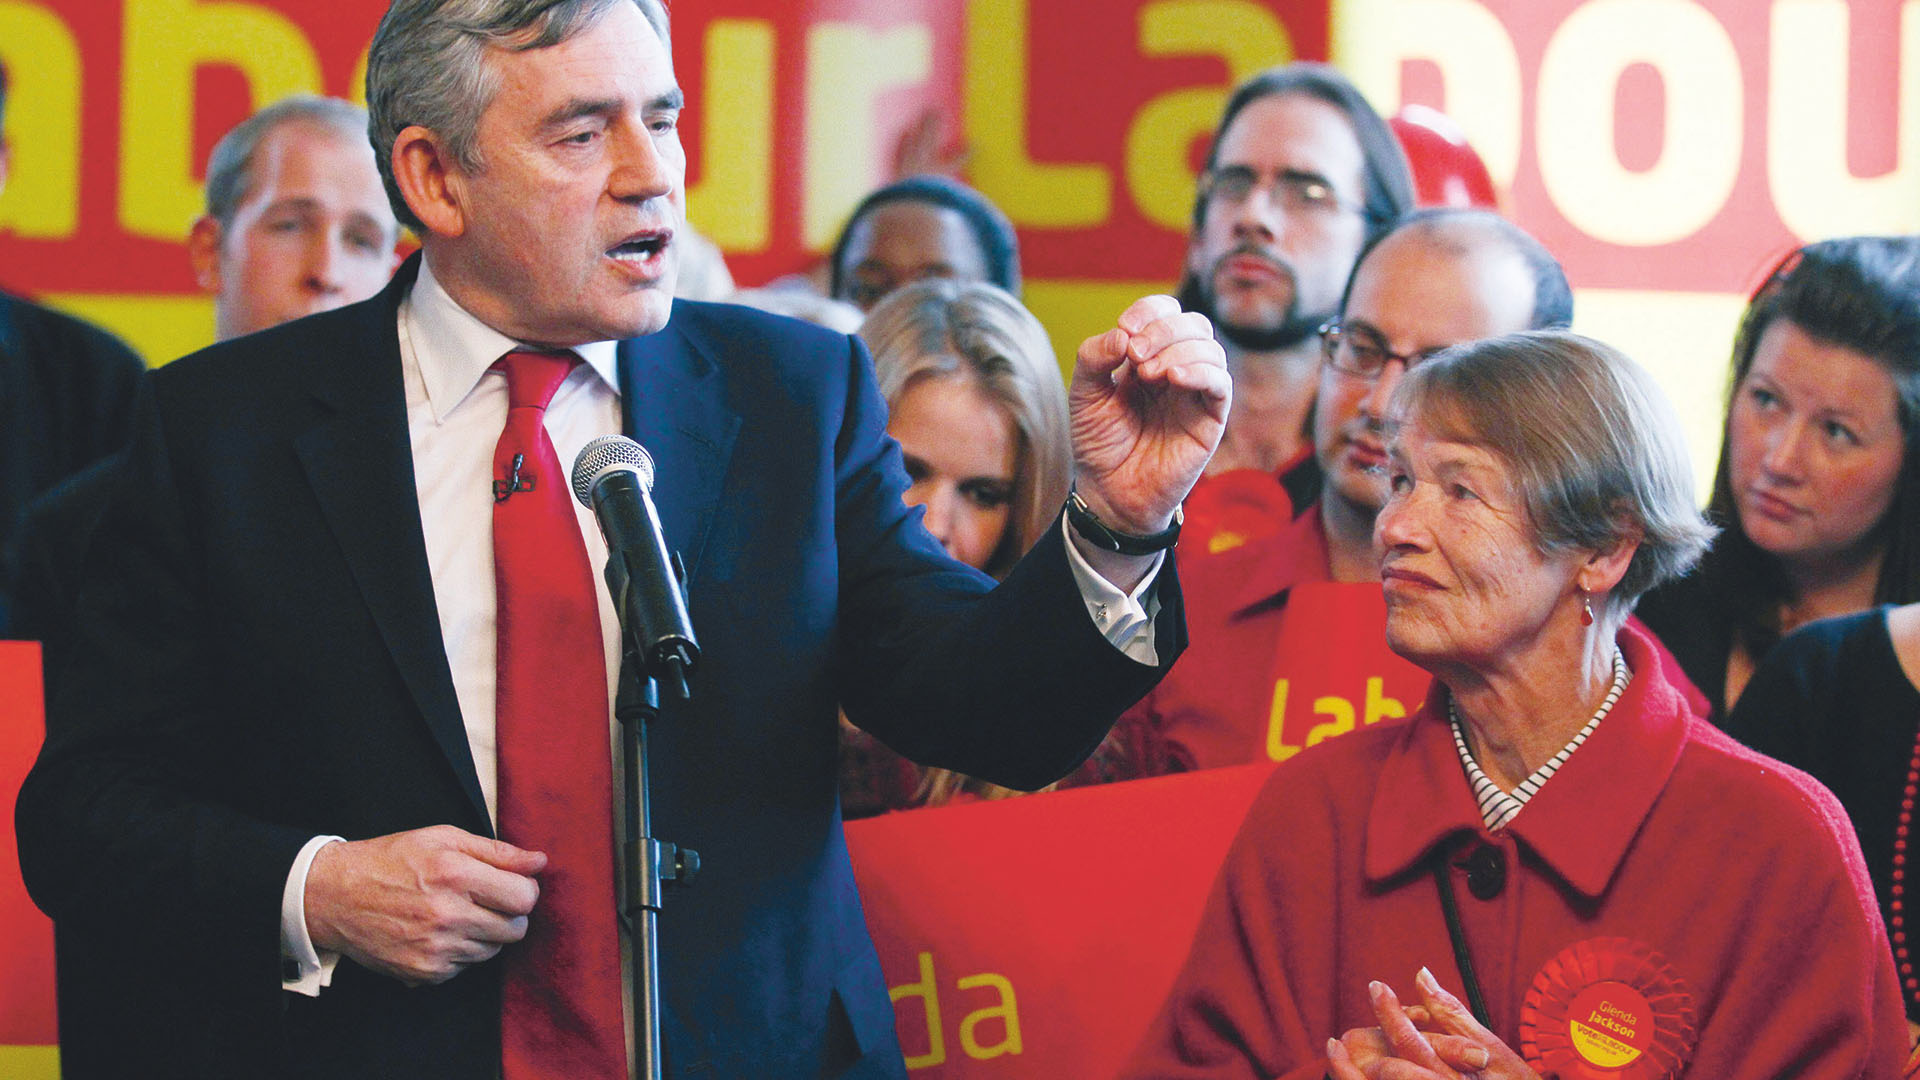 Glenda Jackson and Gordon Brown